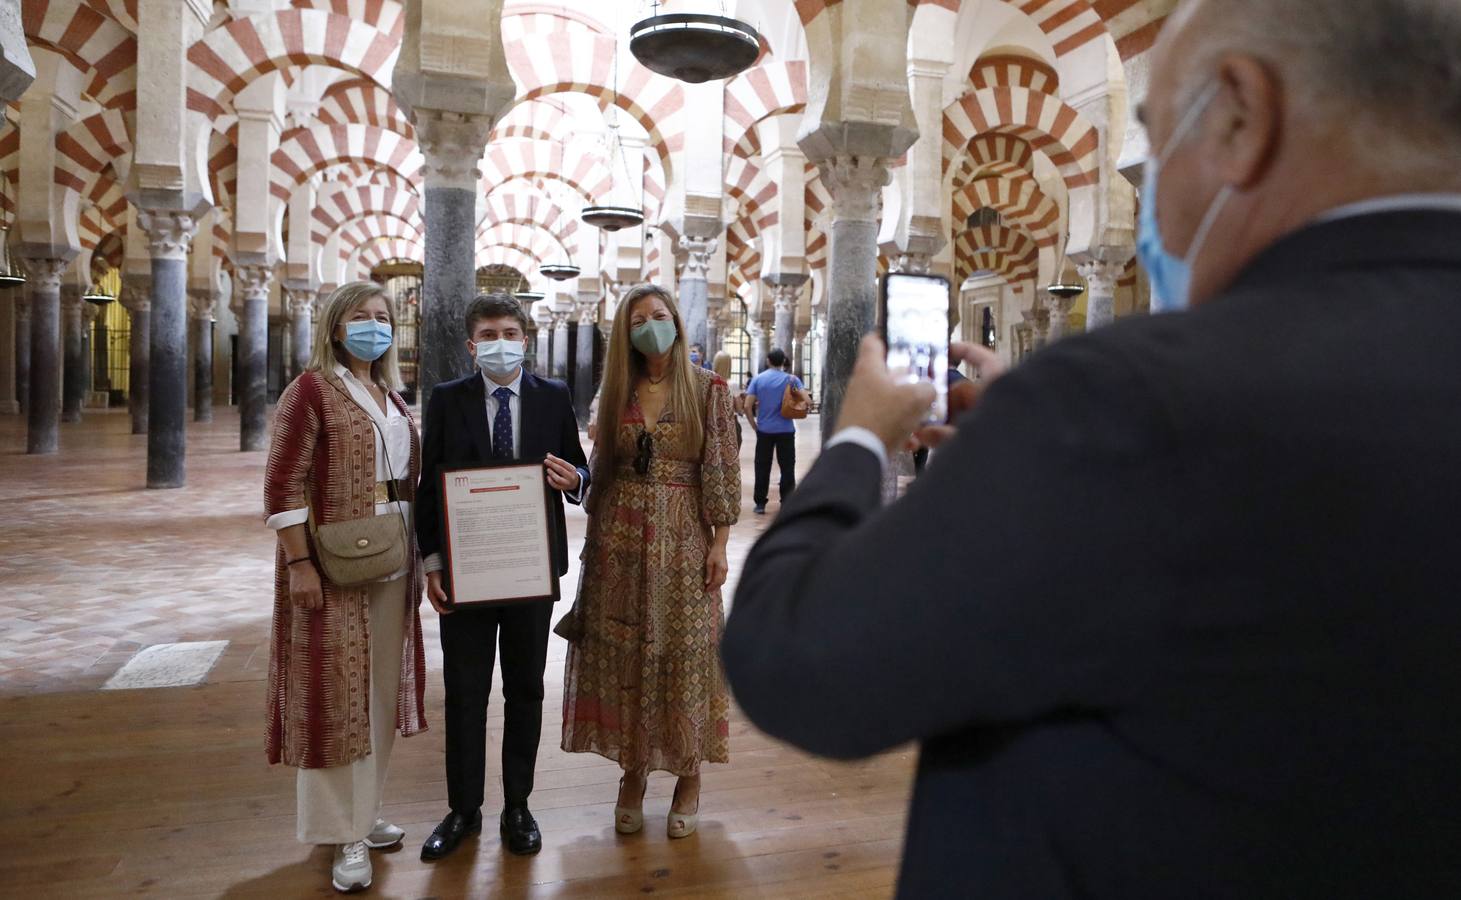 En imágenes, la entrega de los IV Premios de Narrativa Mezquita-Catedral de Córdoba